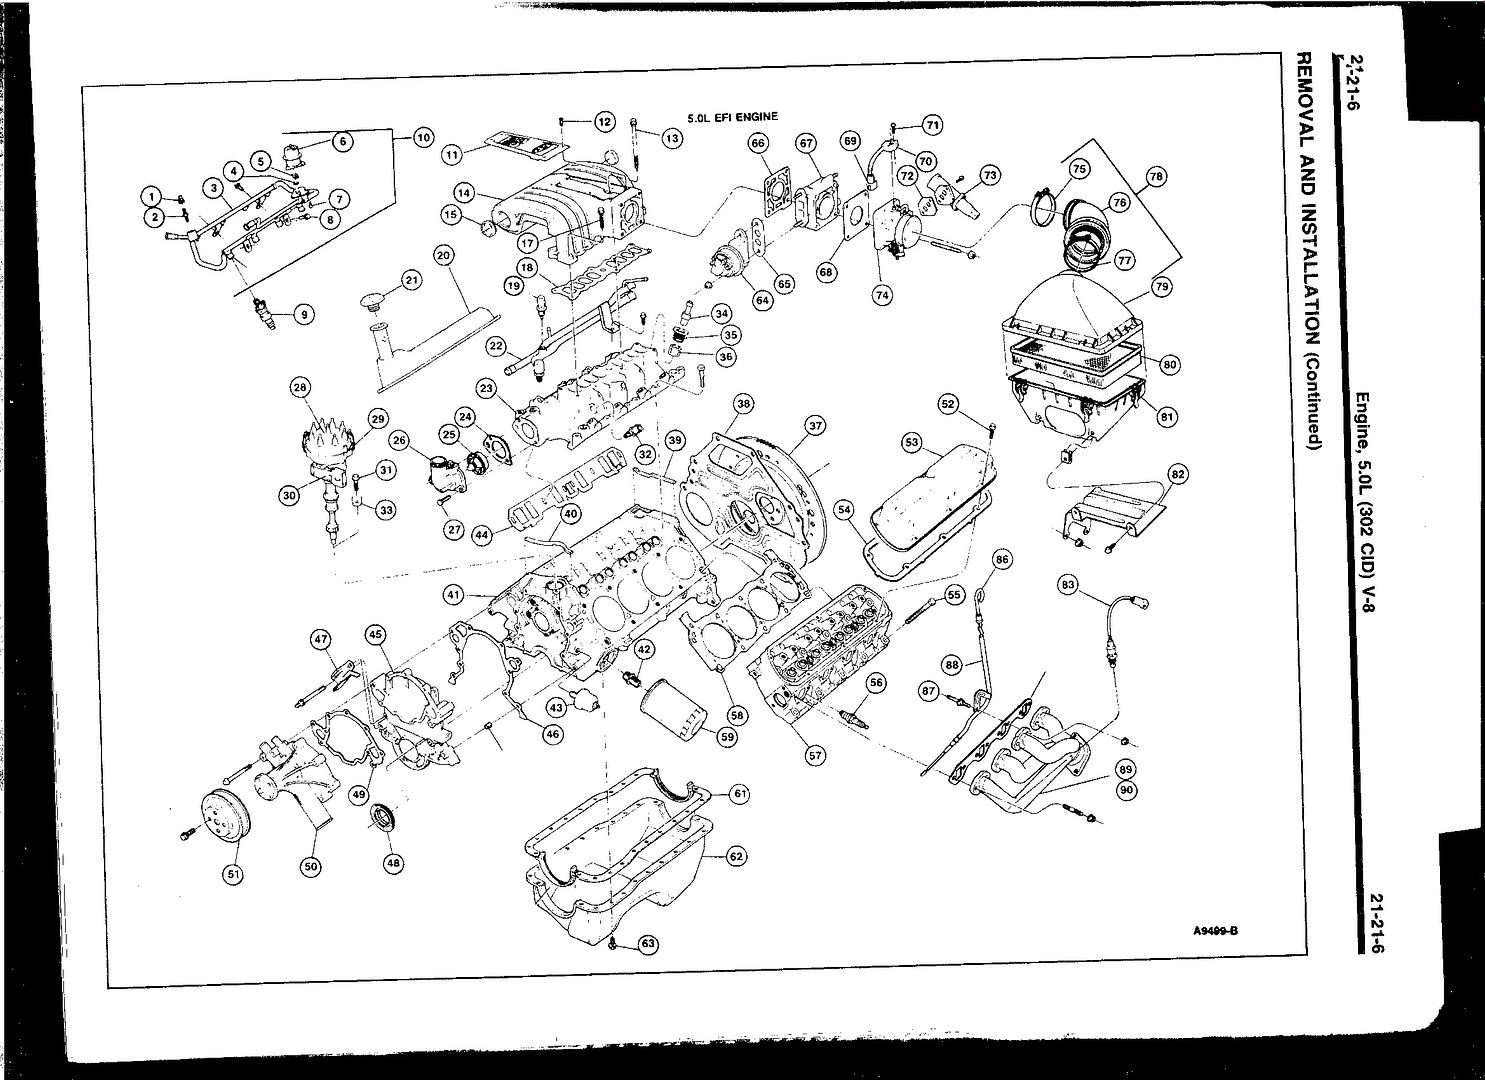 [DIAGRAM] Ford 302 Engine Diagram FULL Version HD Quality Engine